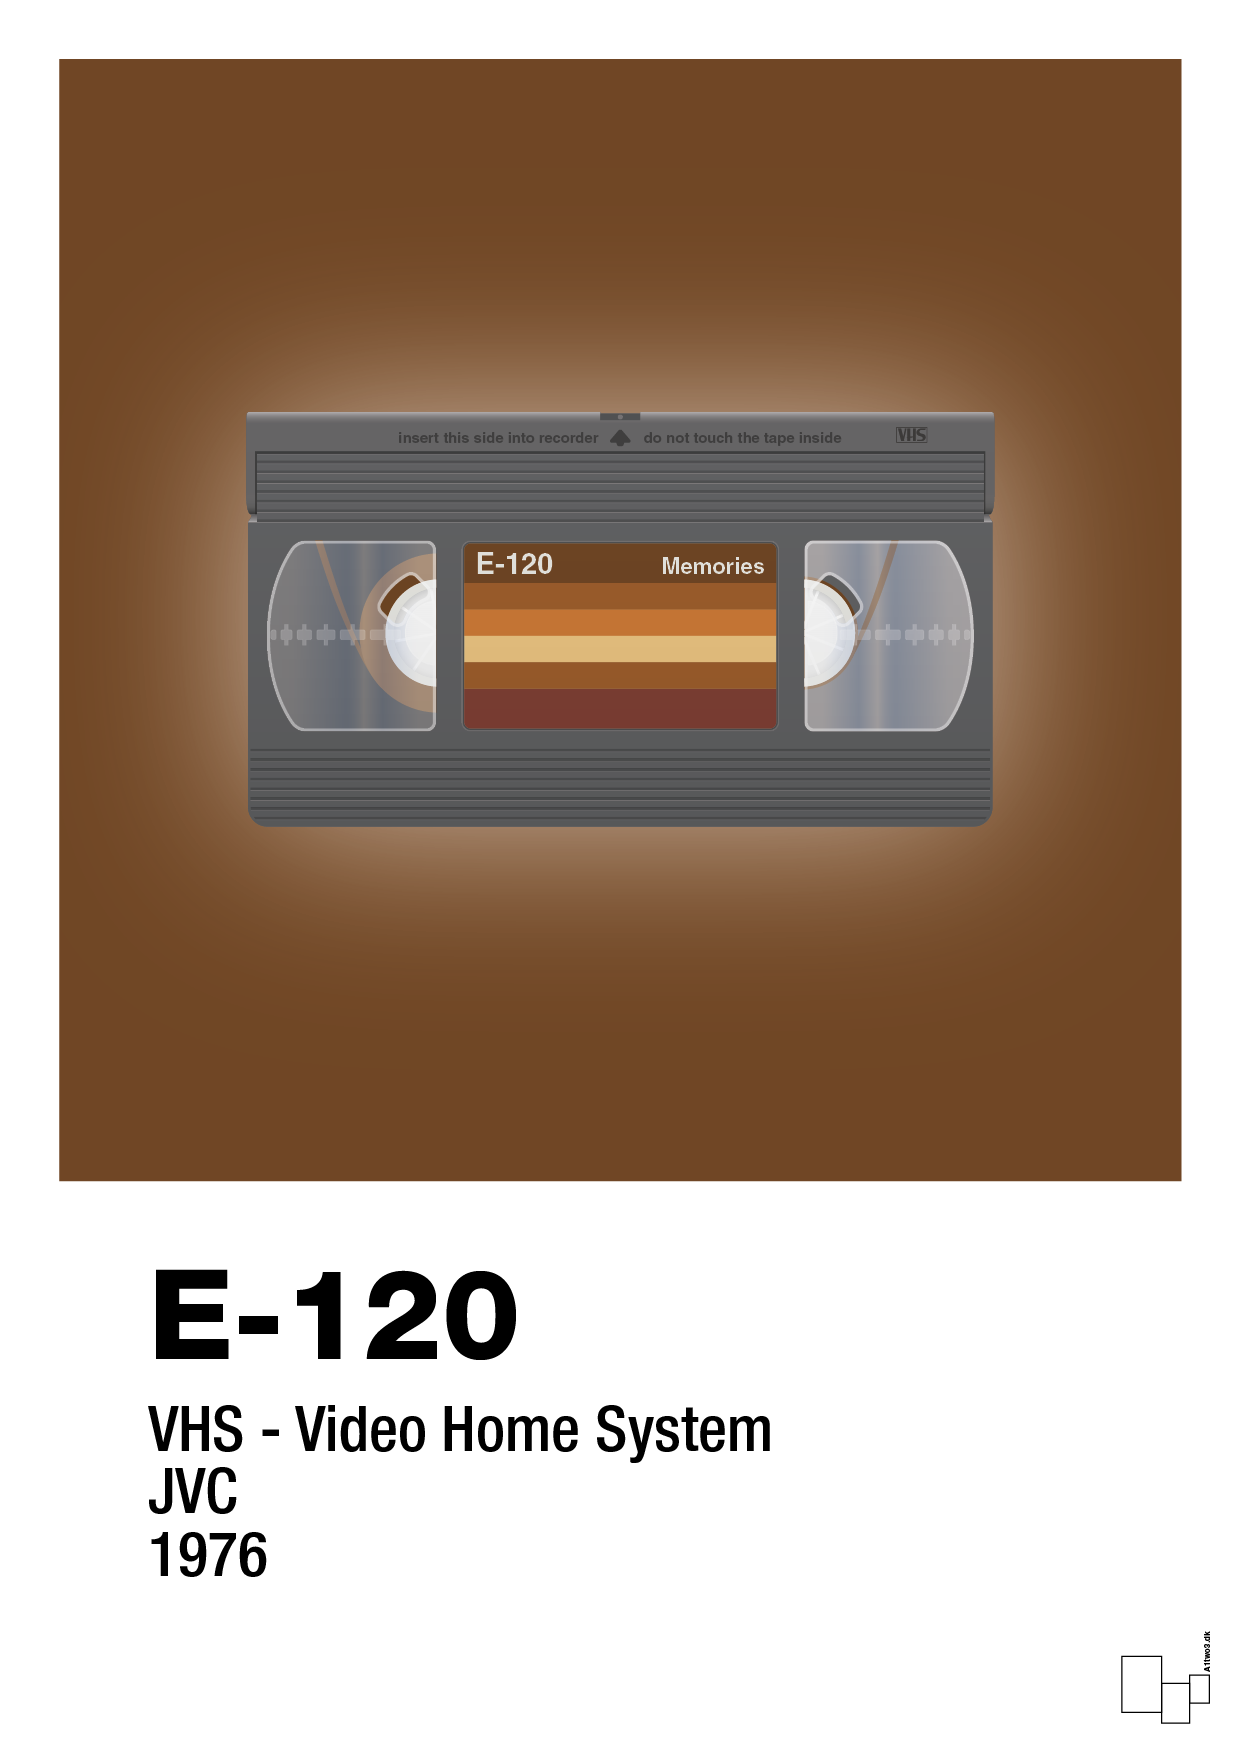 videobånd e-120 - Plakat med Grafik i Dark Brown